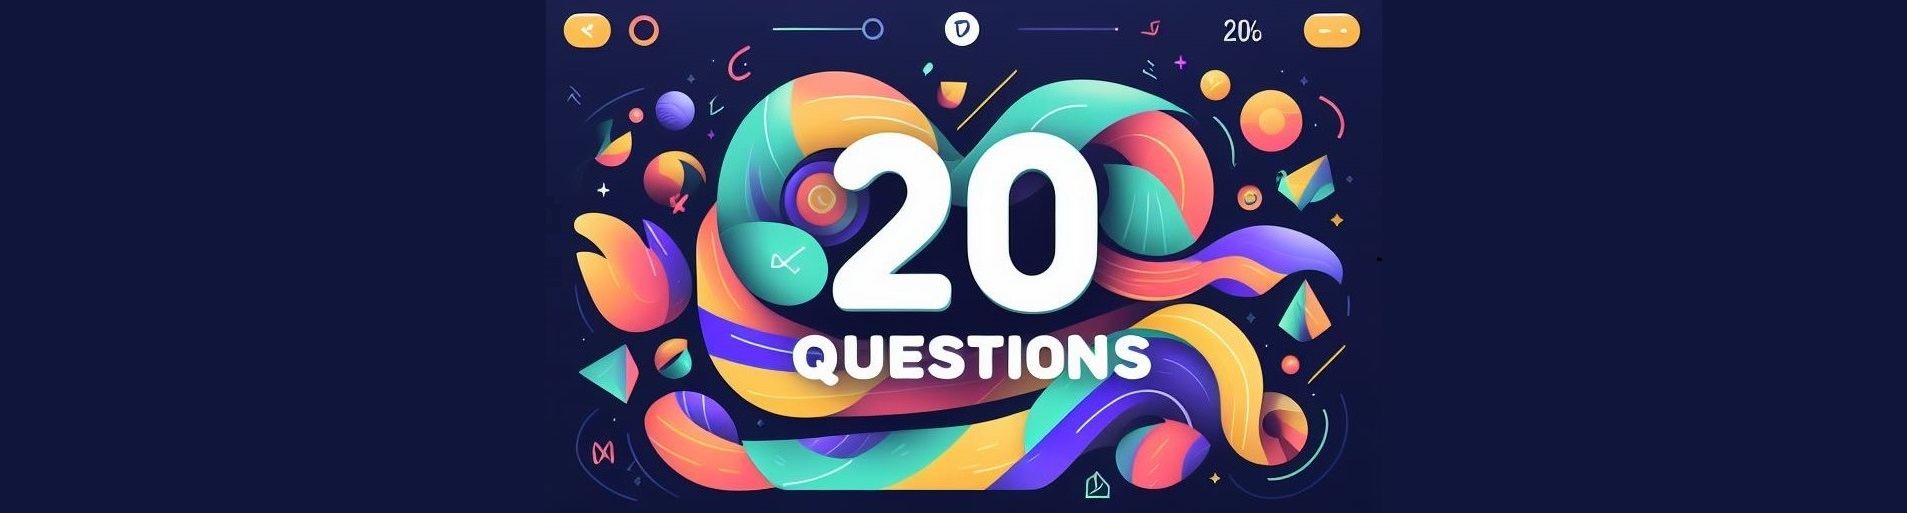 Twenty Questions with AI chatGPT